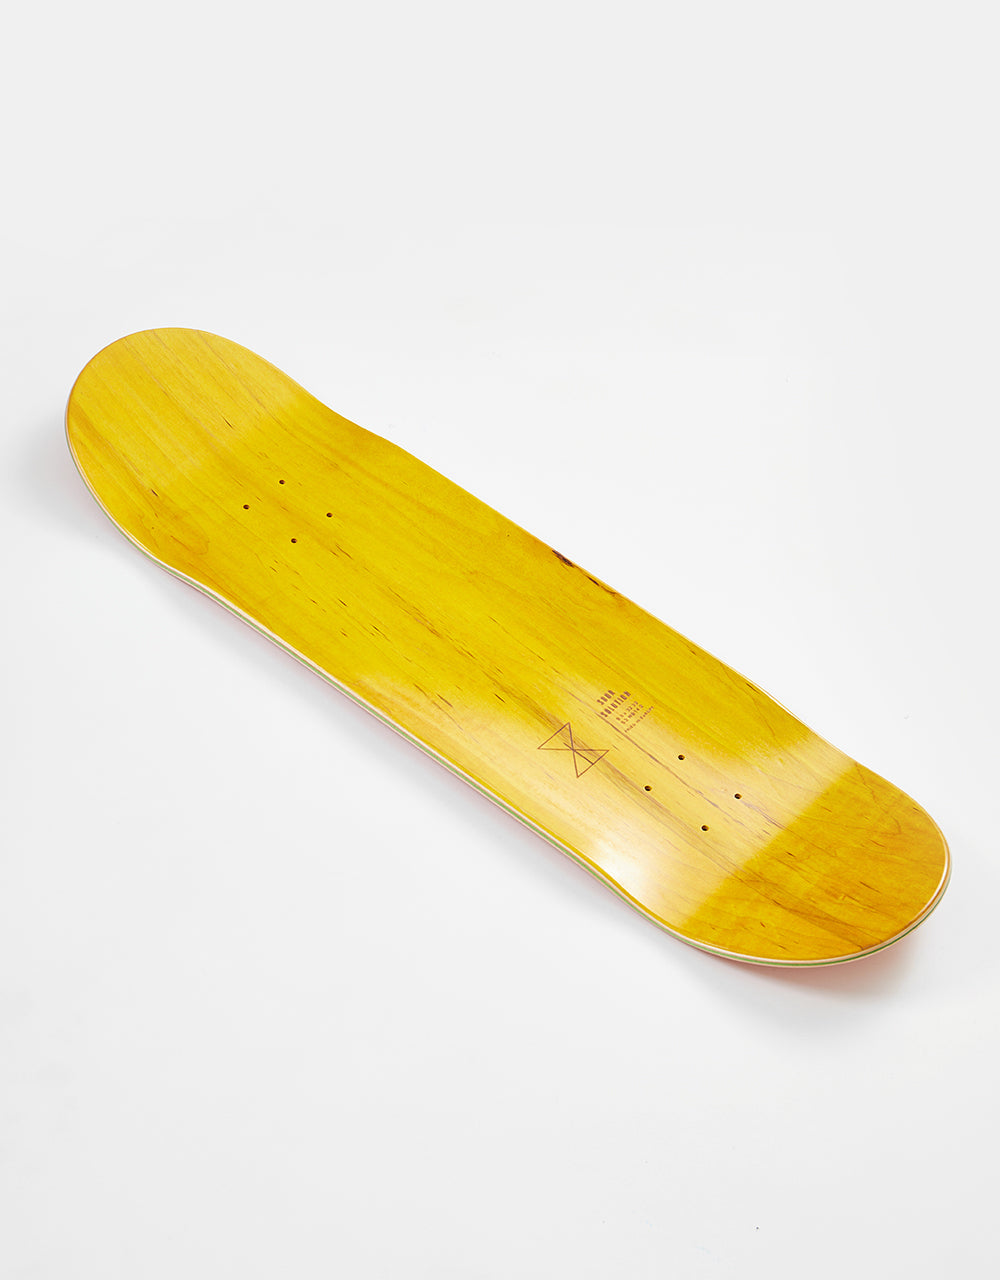 Sour Solution Oscar Napoleon Skateboard Deck - 9"